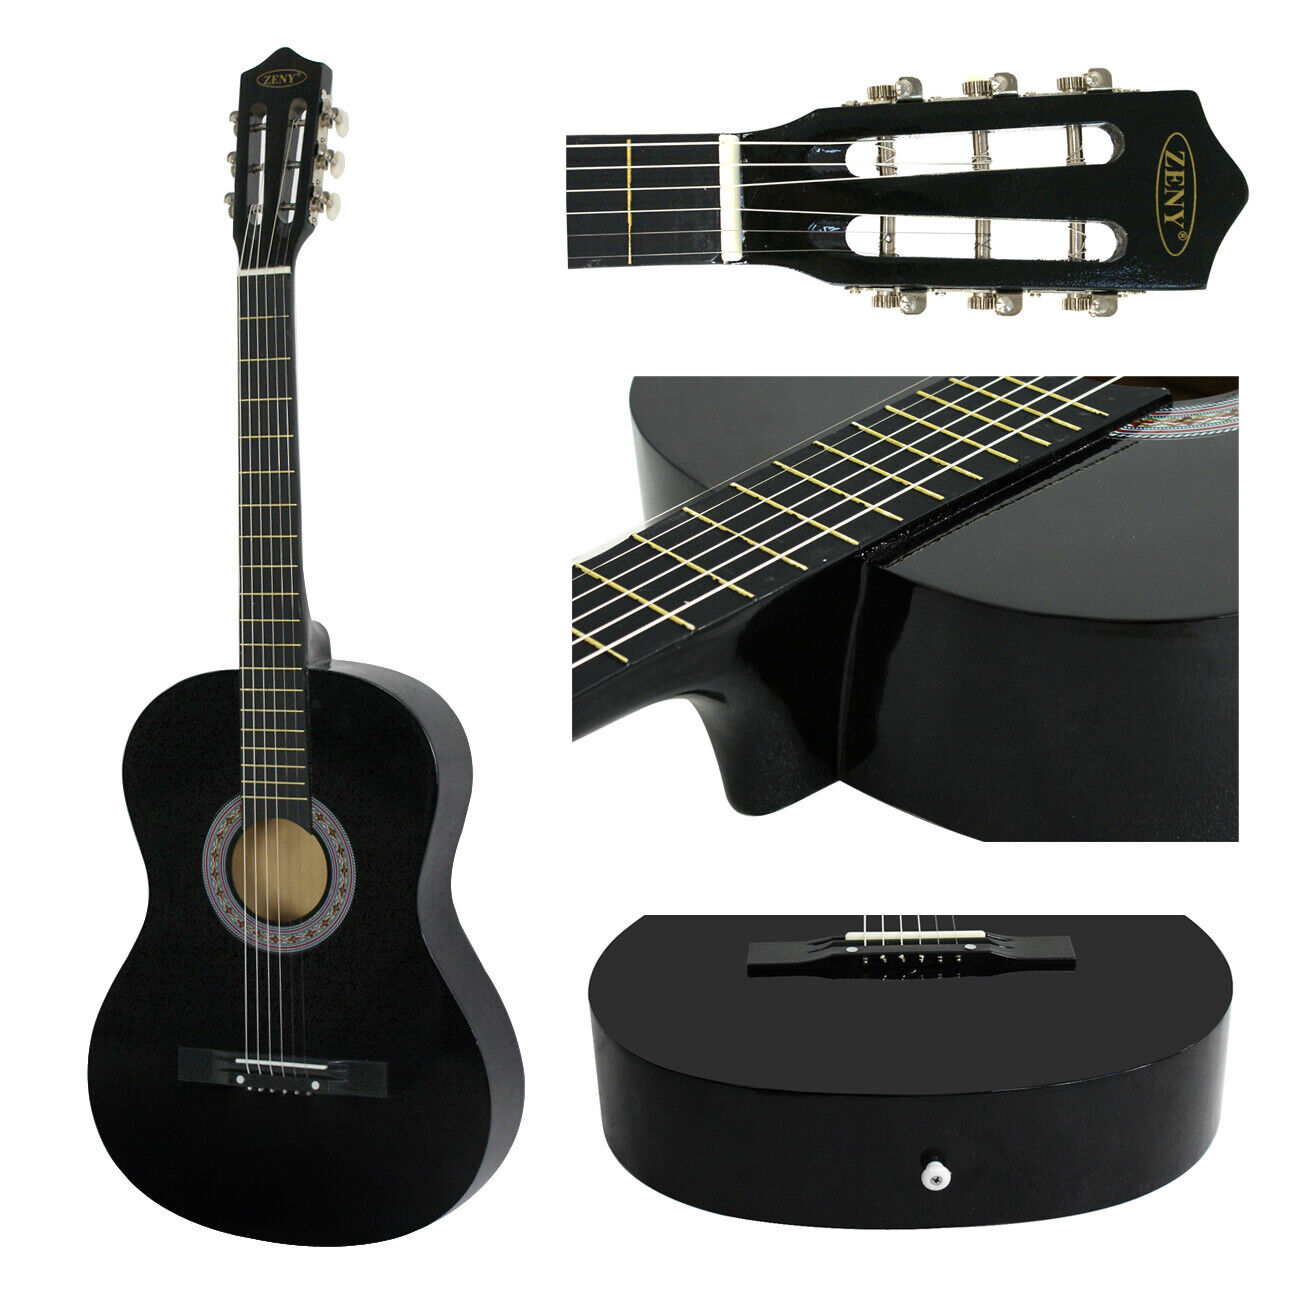 38" Full Size Acoustic Guitar Adult Kids Beginners Black Guitar with Guitar Pick